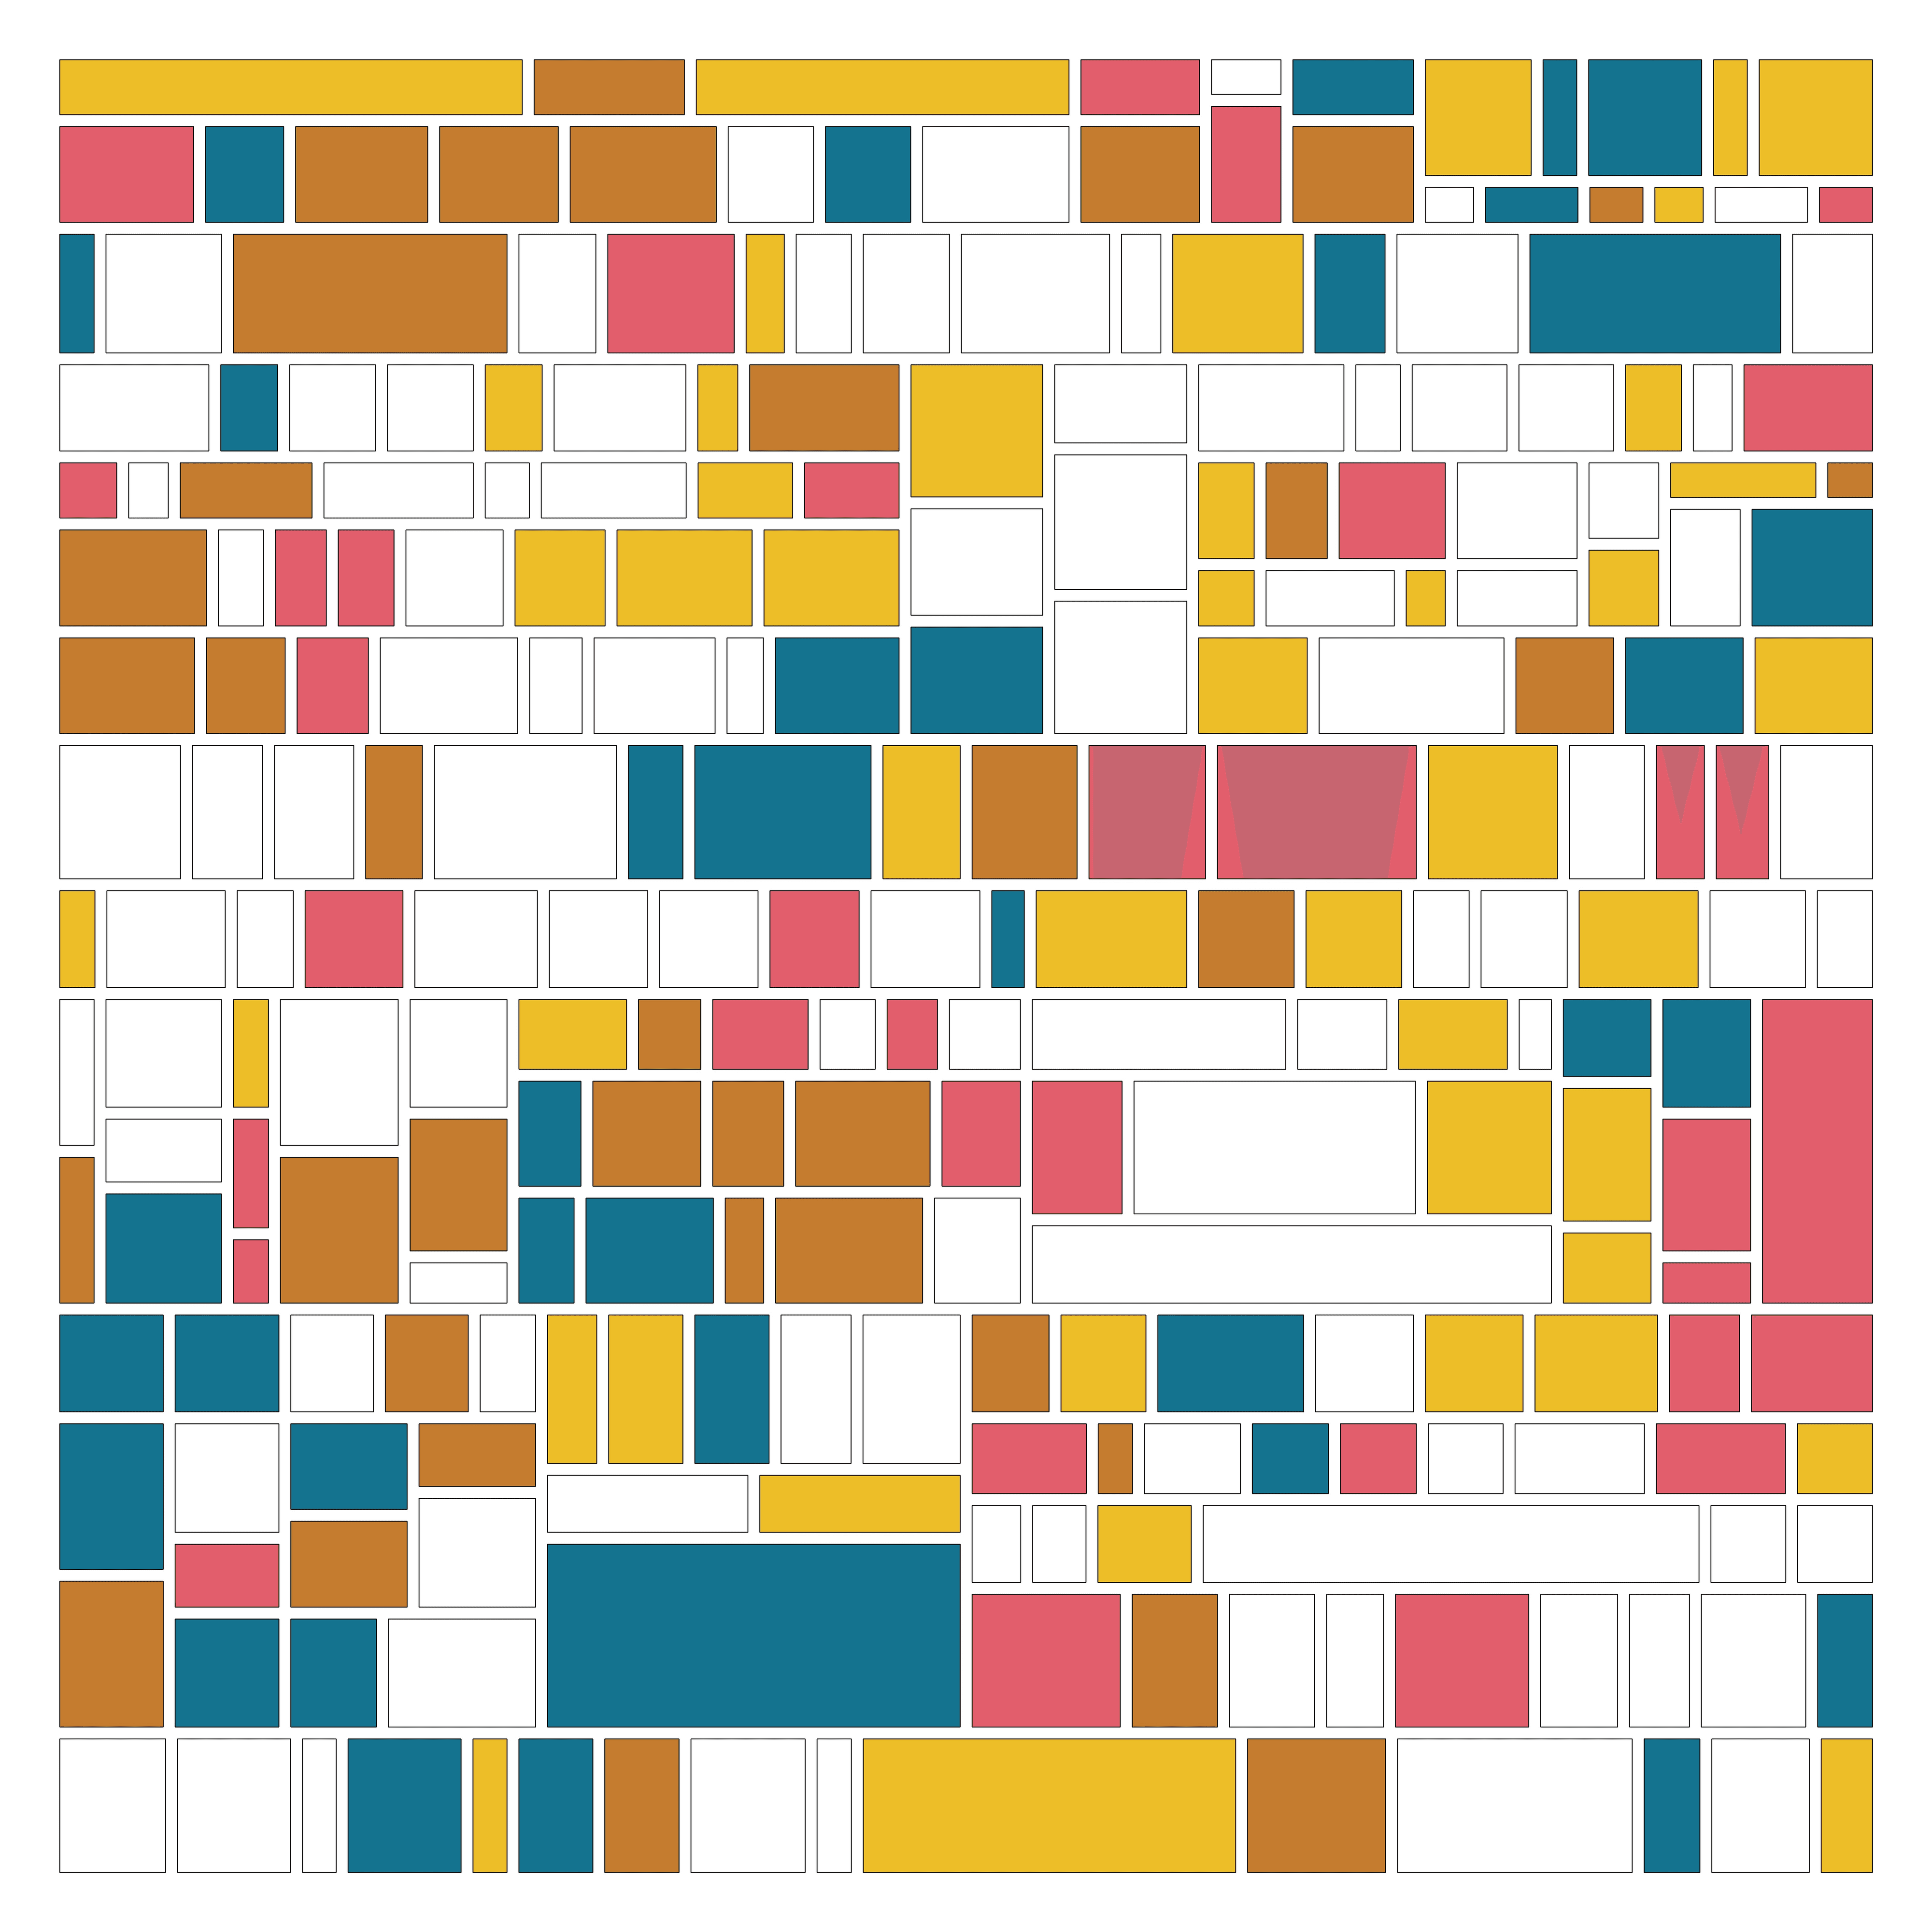 '256c' - Mondrian Inspired - MooniTooki Project - Art from Crypto Data